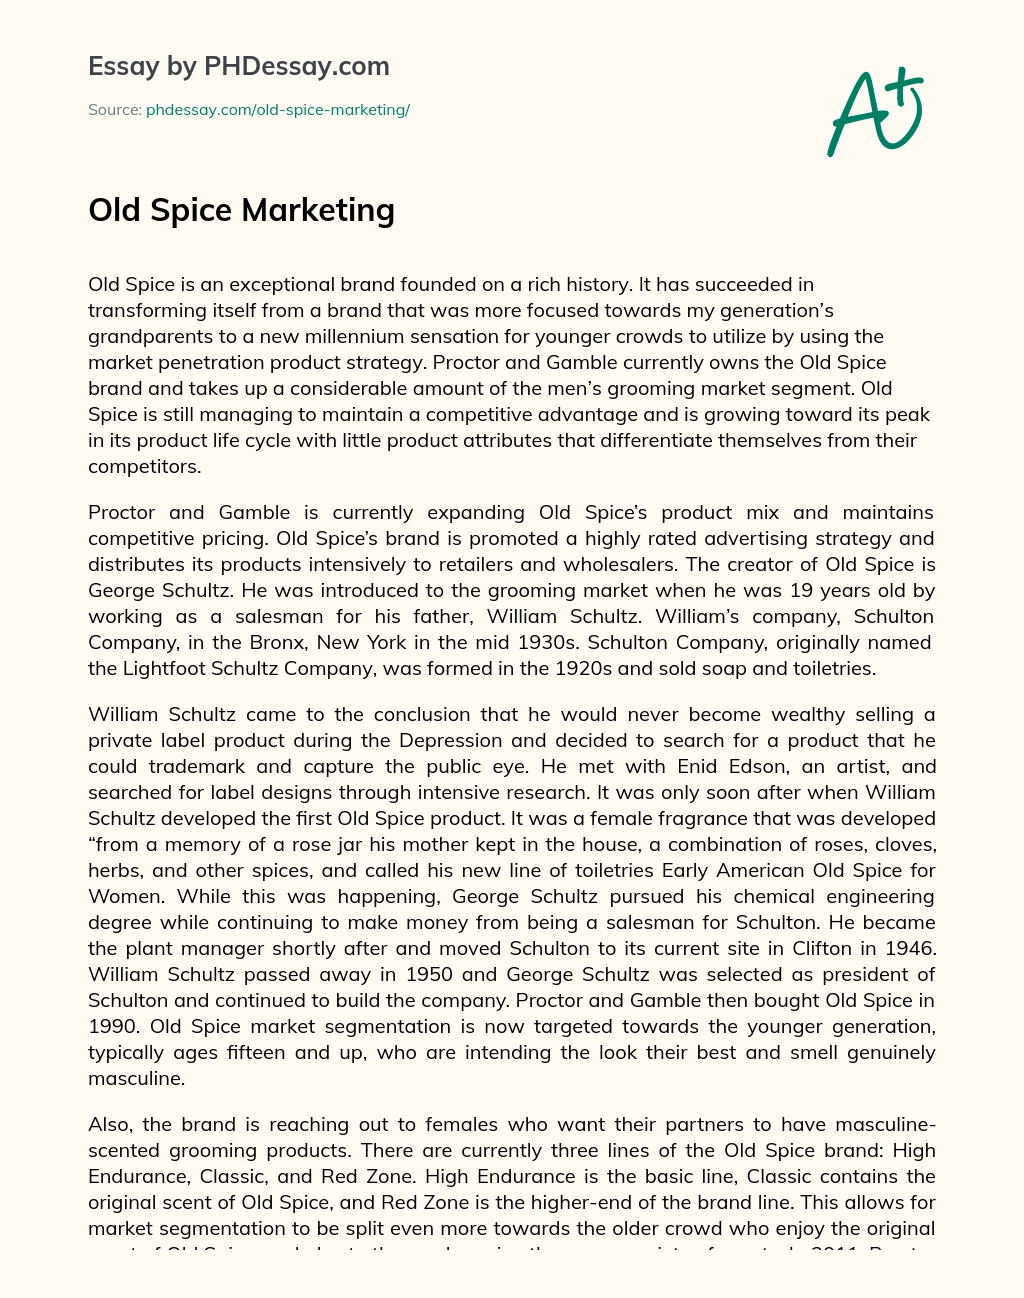 Old Spice Marketing essay